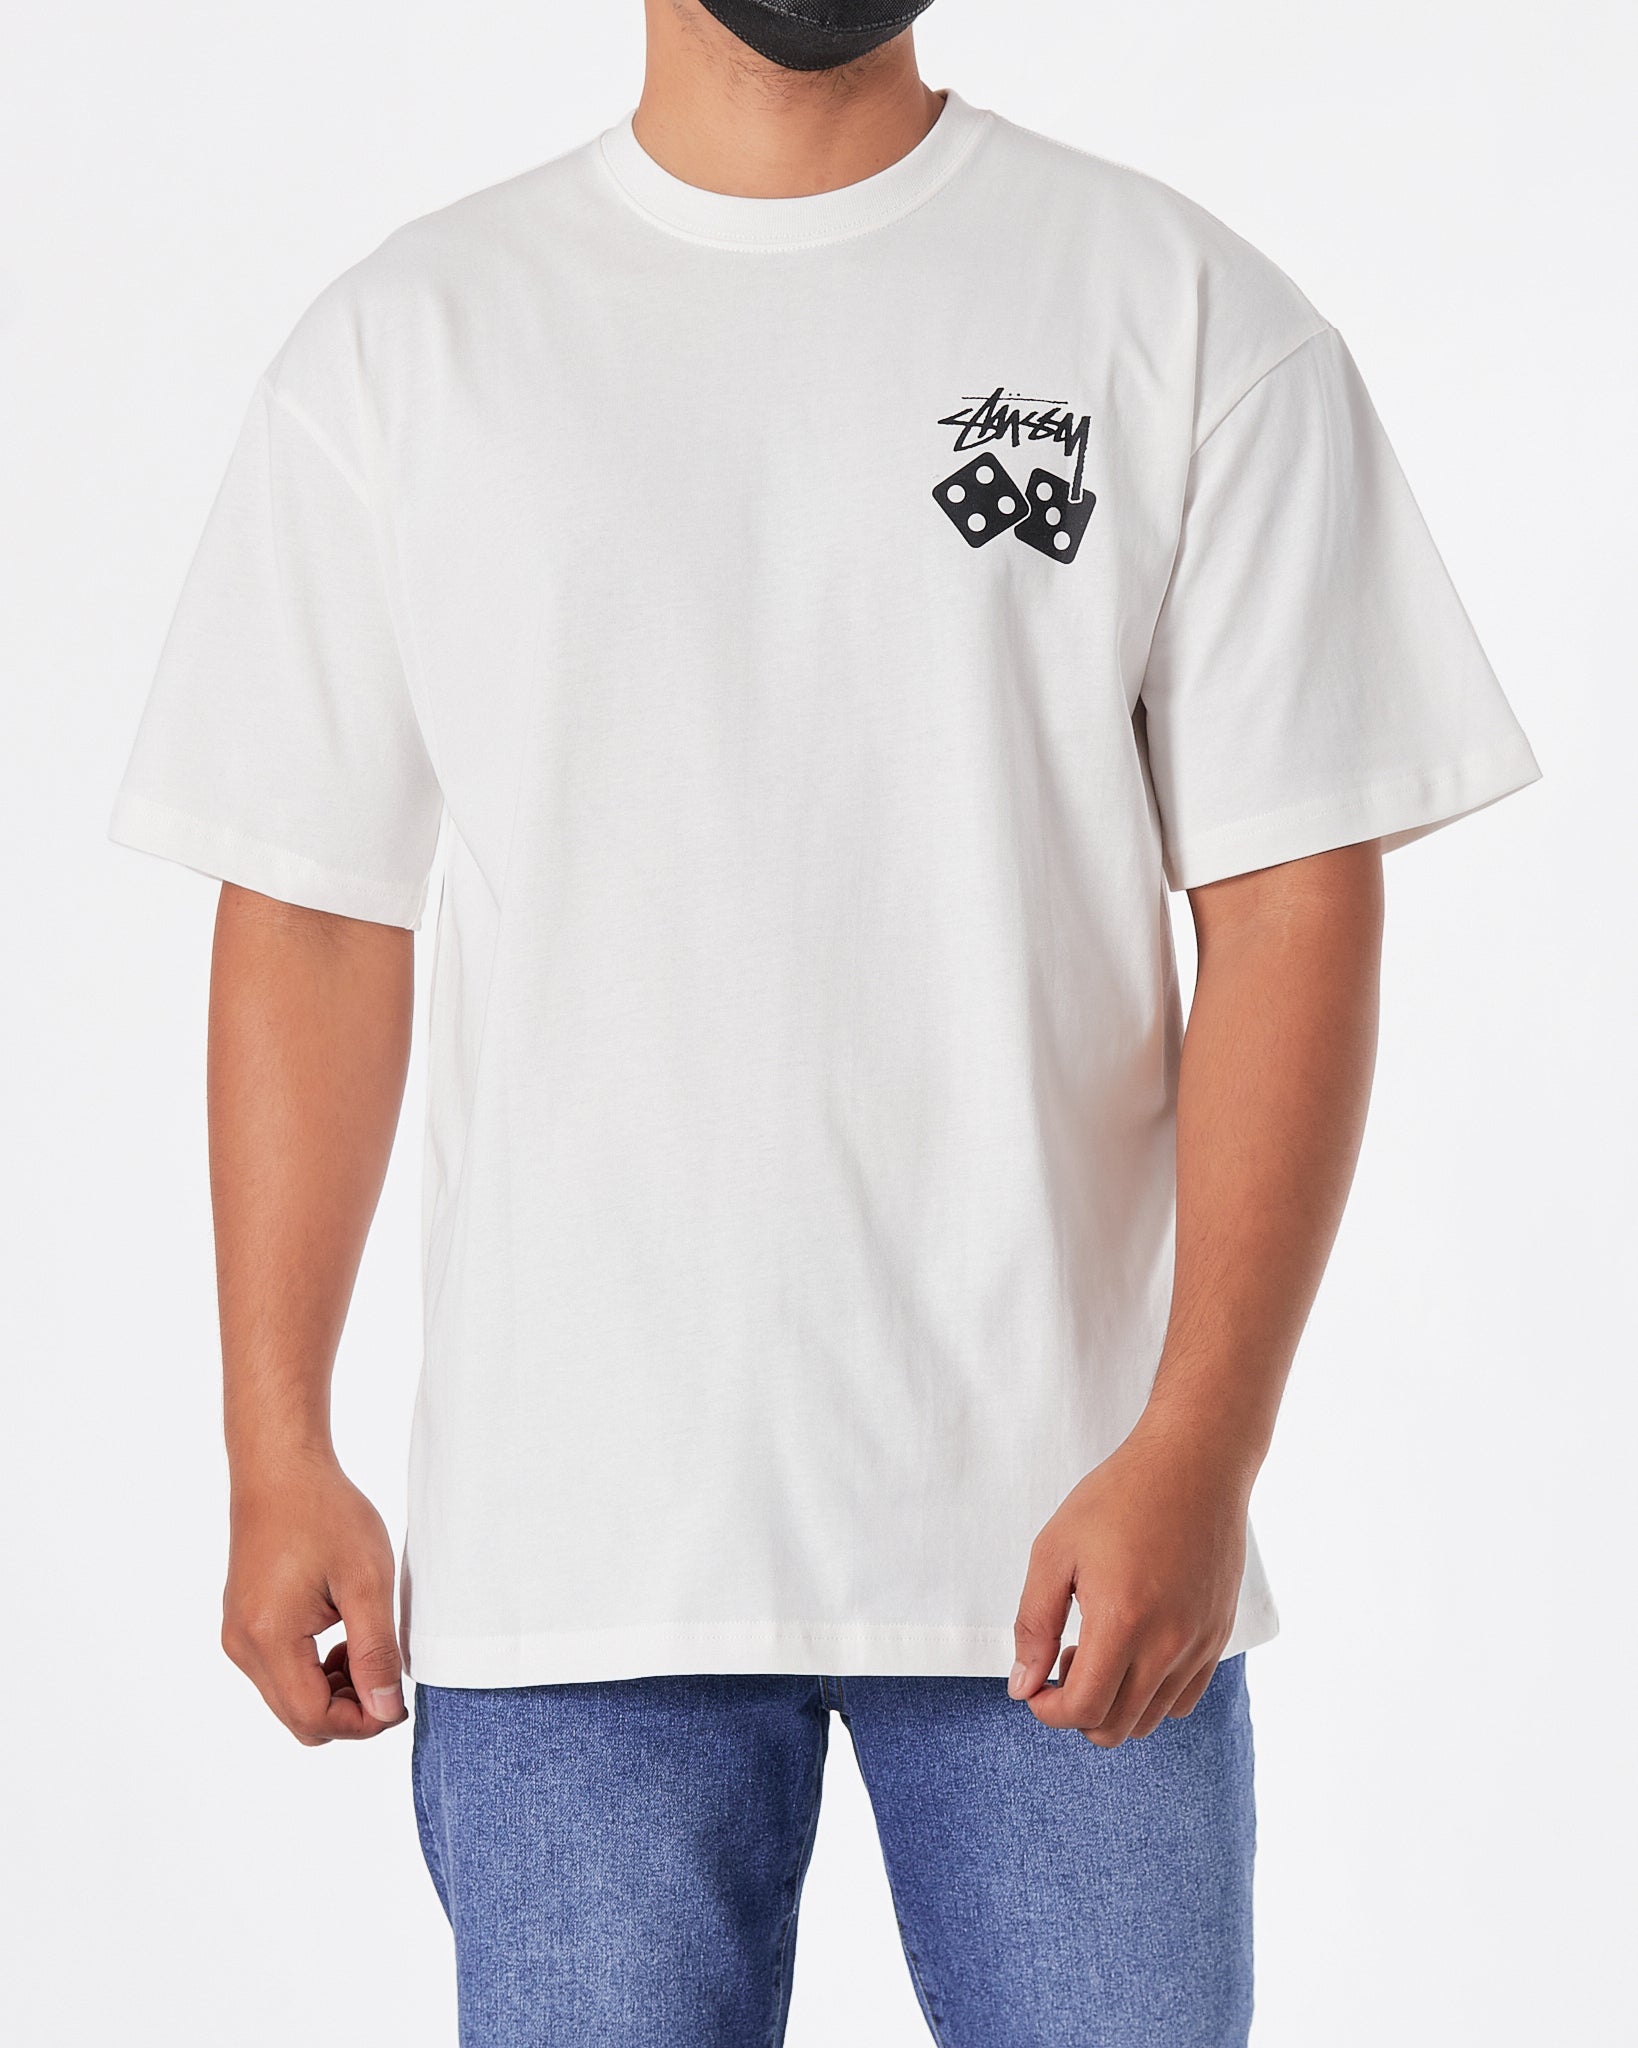 STU Dice Back Logo Printed Men White T-Shirt 22.90